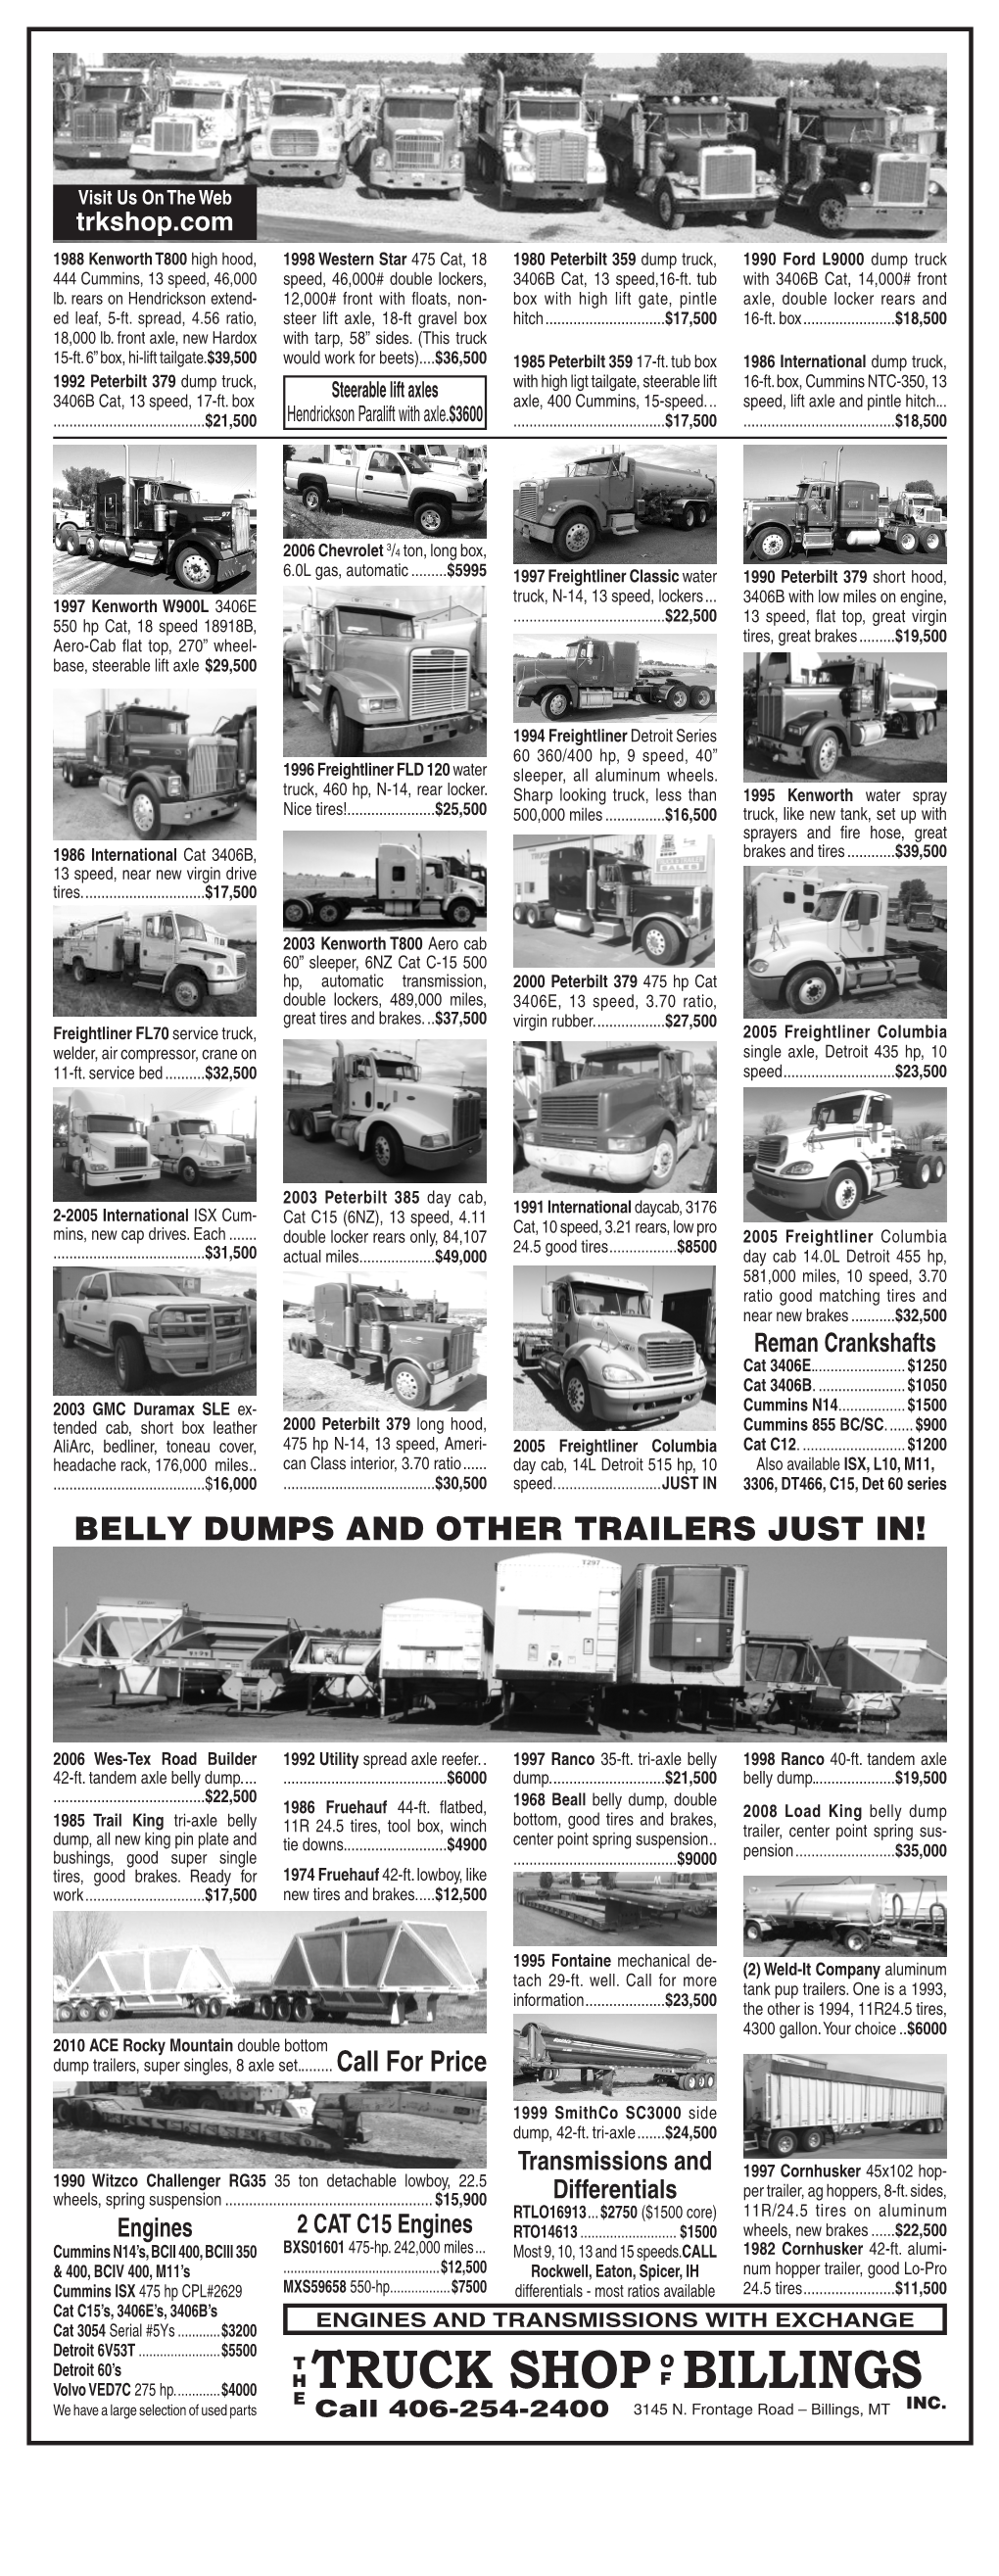 Truck Shop Billings E Inc